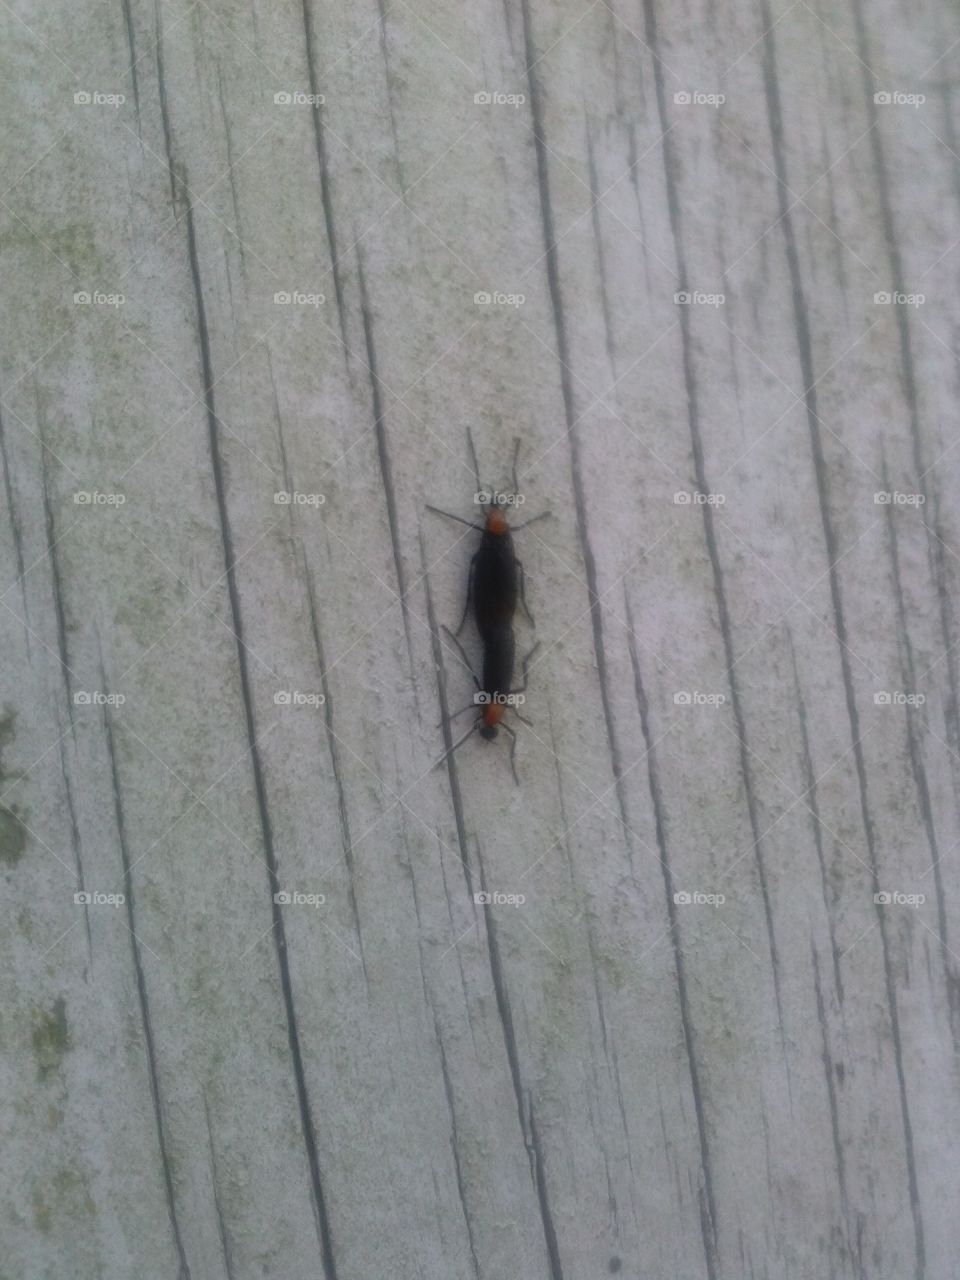 Love Bug Season. Love Bugs in Florida